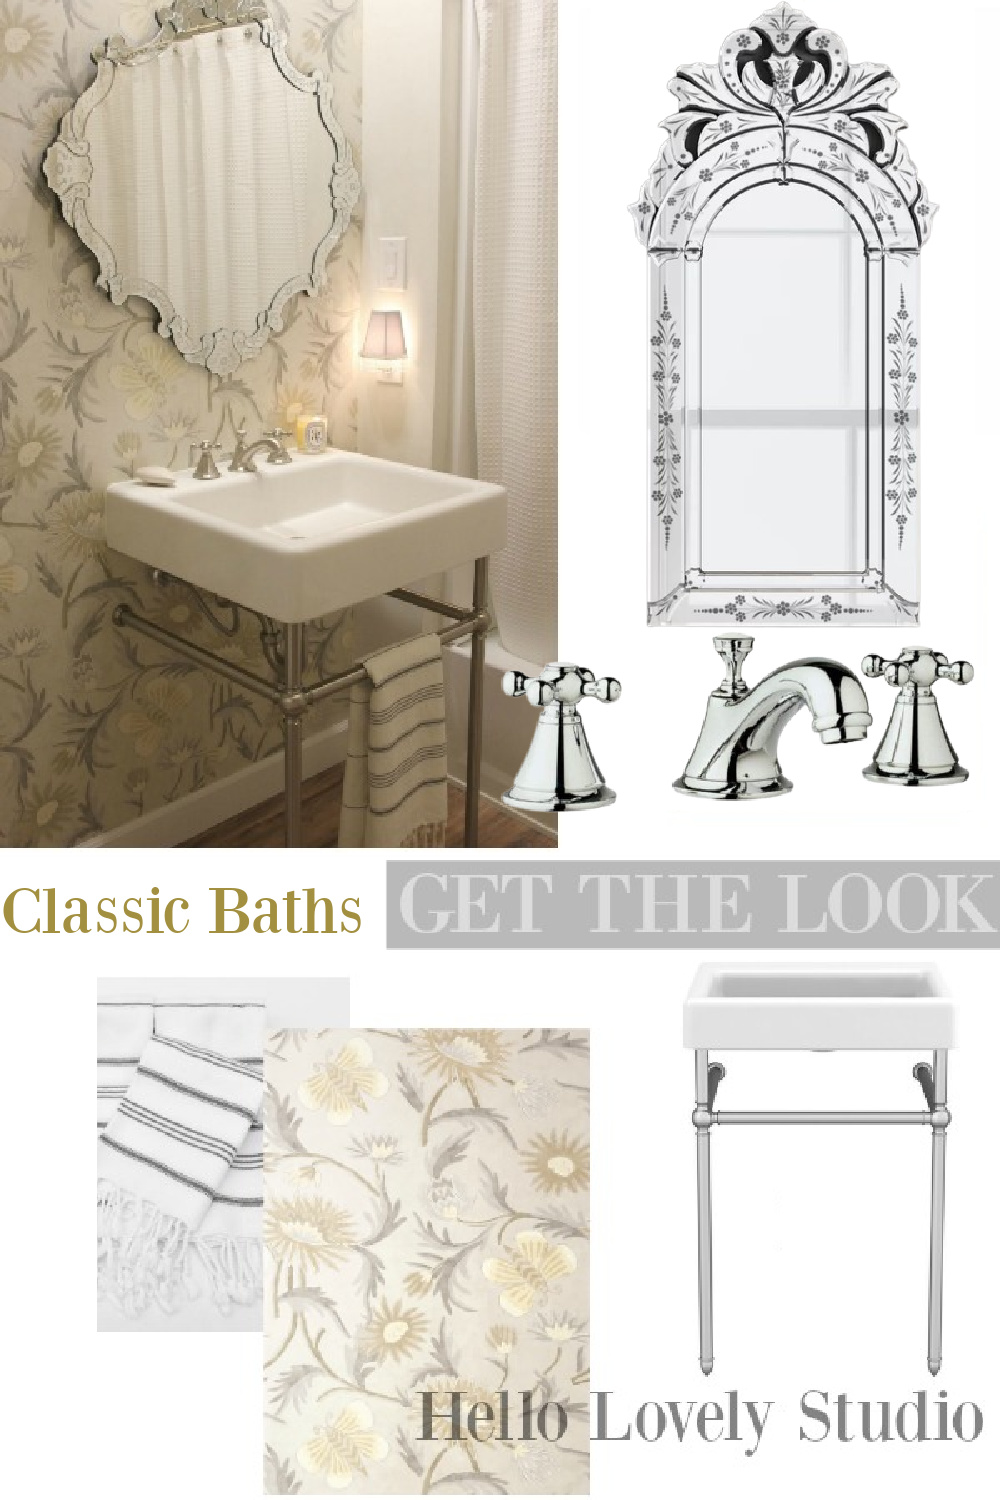 Classic Baths: Get the Look on Hello Lovely Studio. #classicbathdesign #powderbath